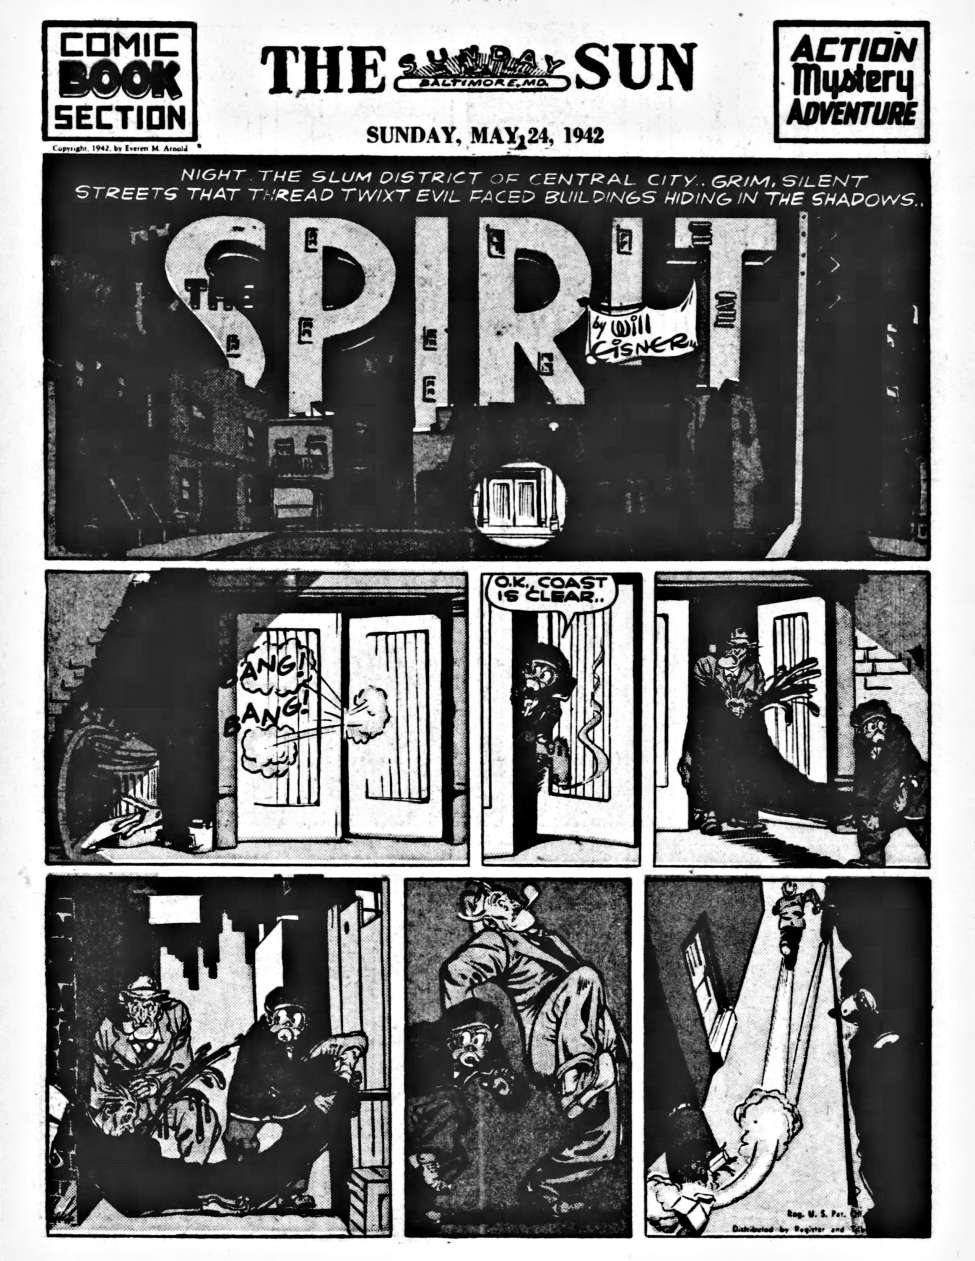 Book Cover For The Spirit (1942-05-24) - Baltimore Sun (b/w)